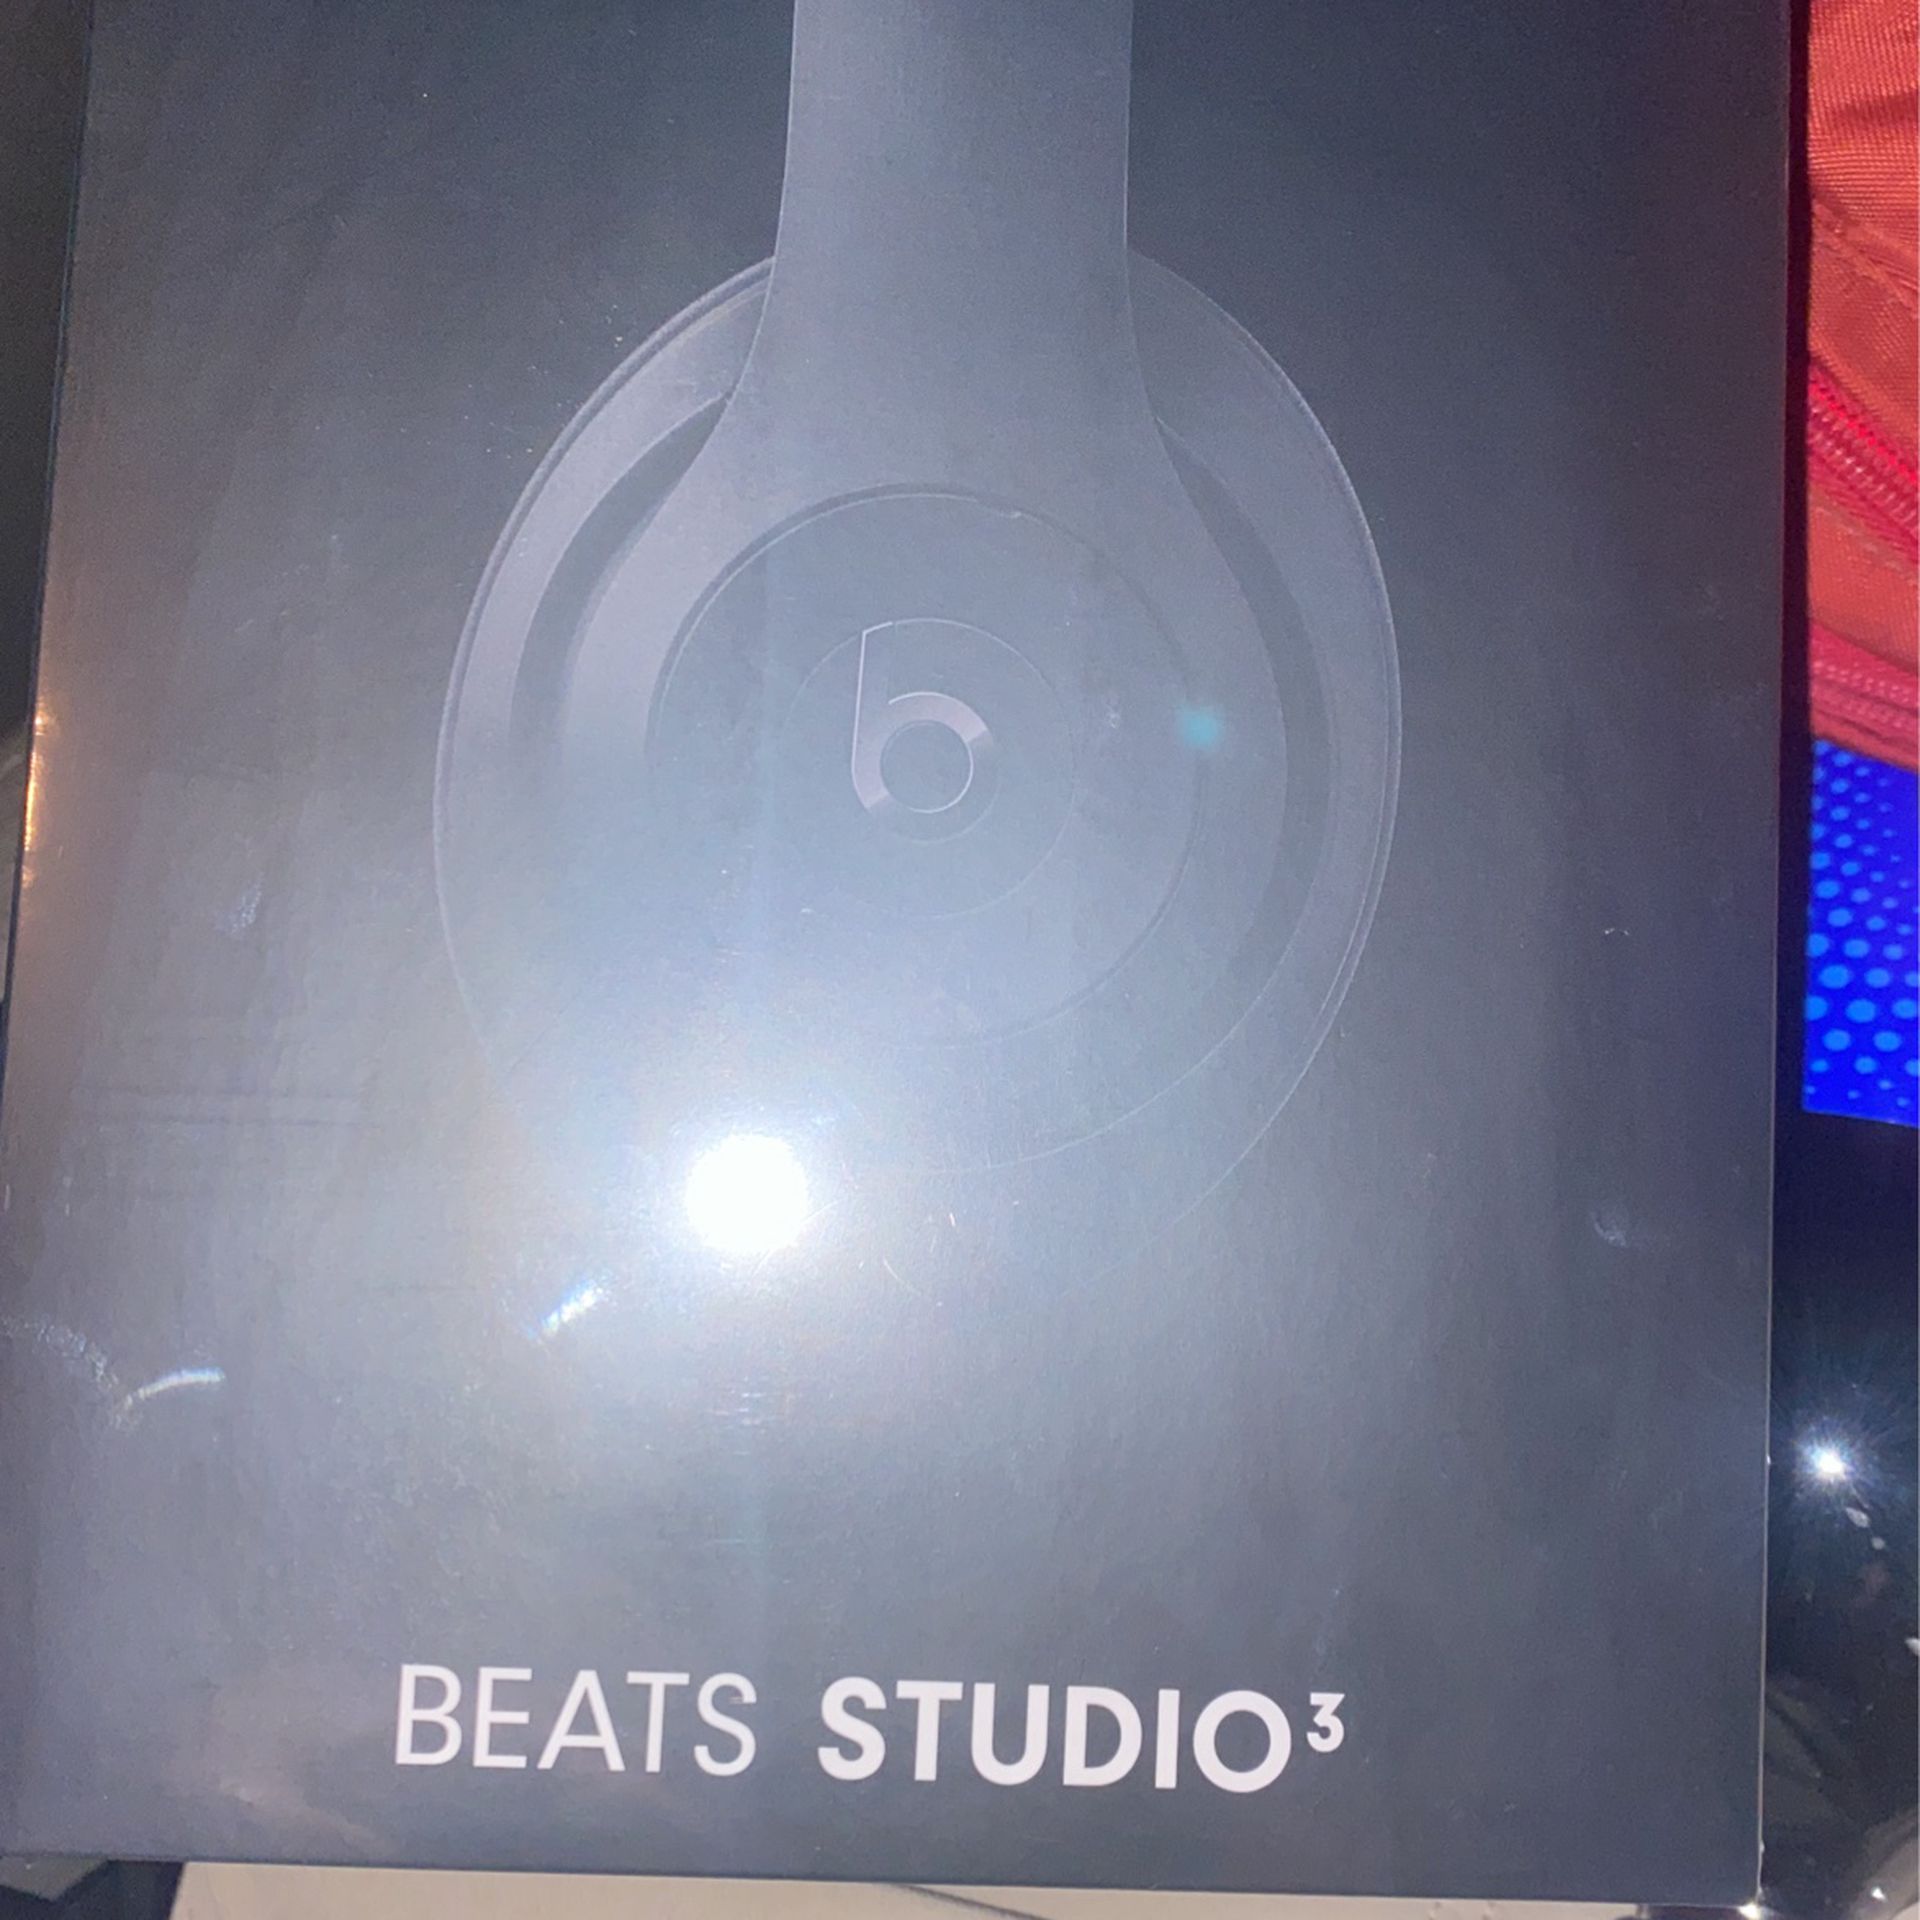 Beats Studio 3 